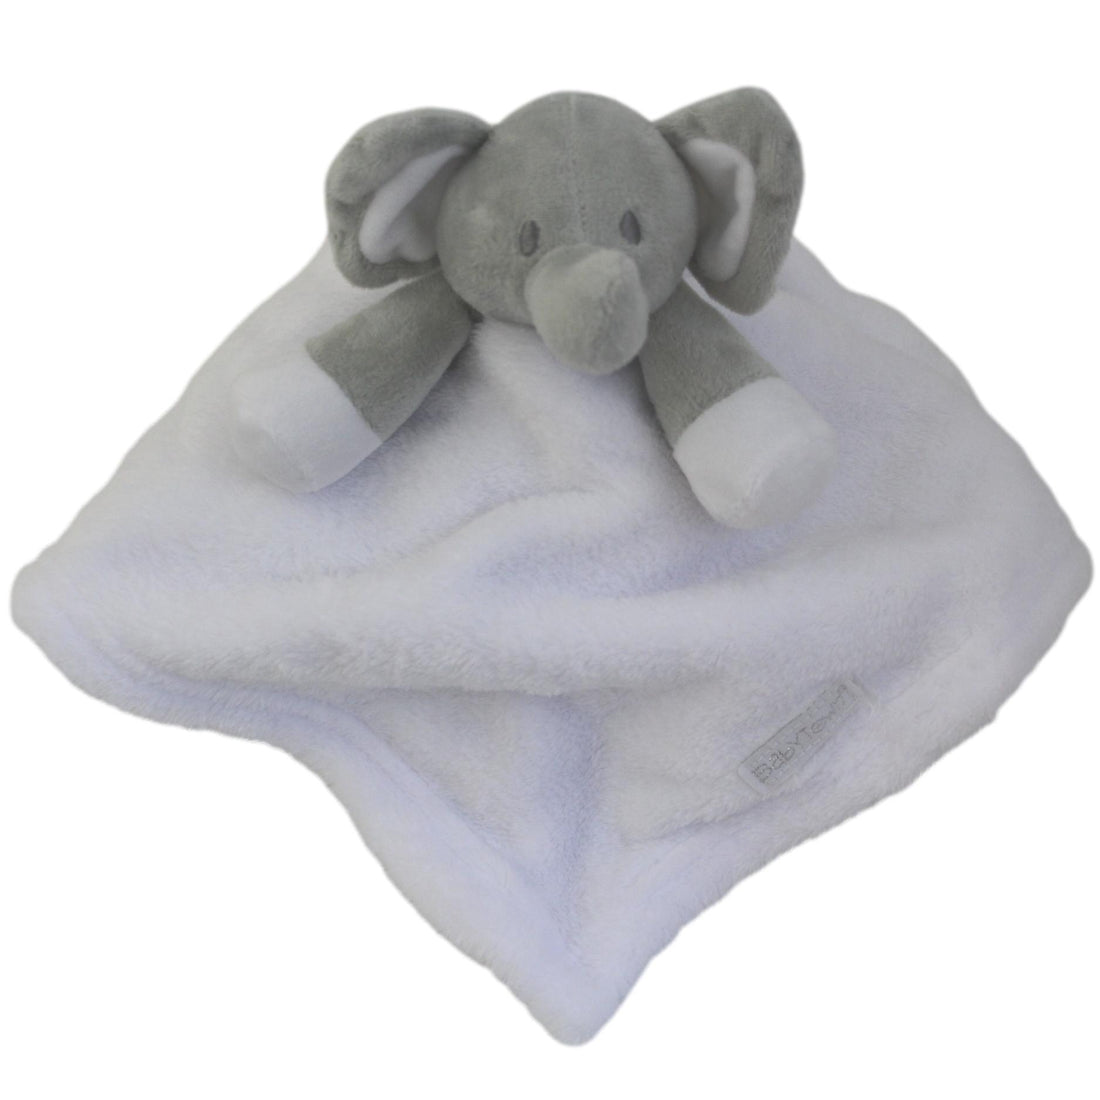 White and Grey Baby Elephant Comforter